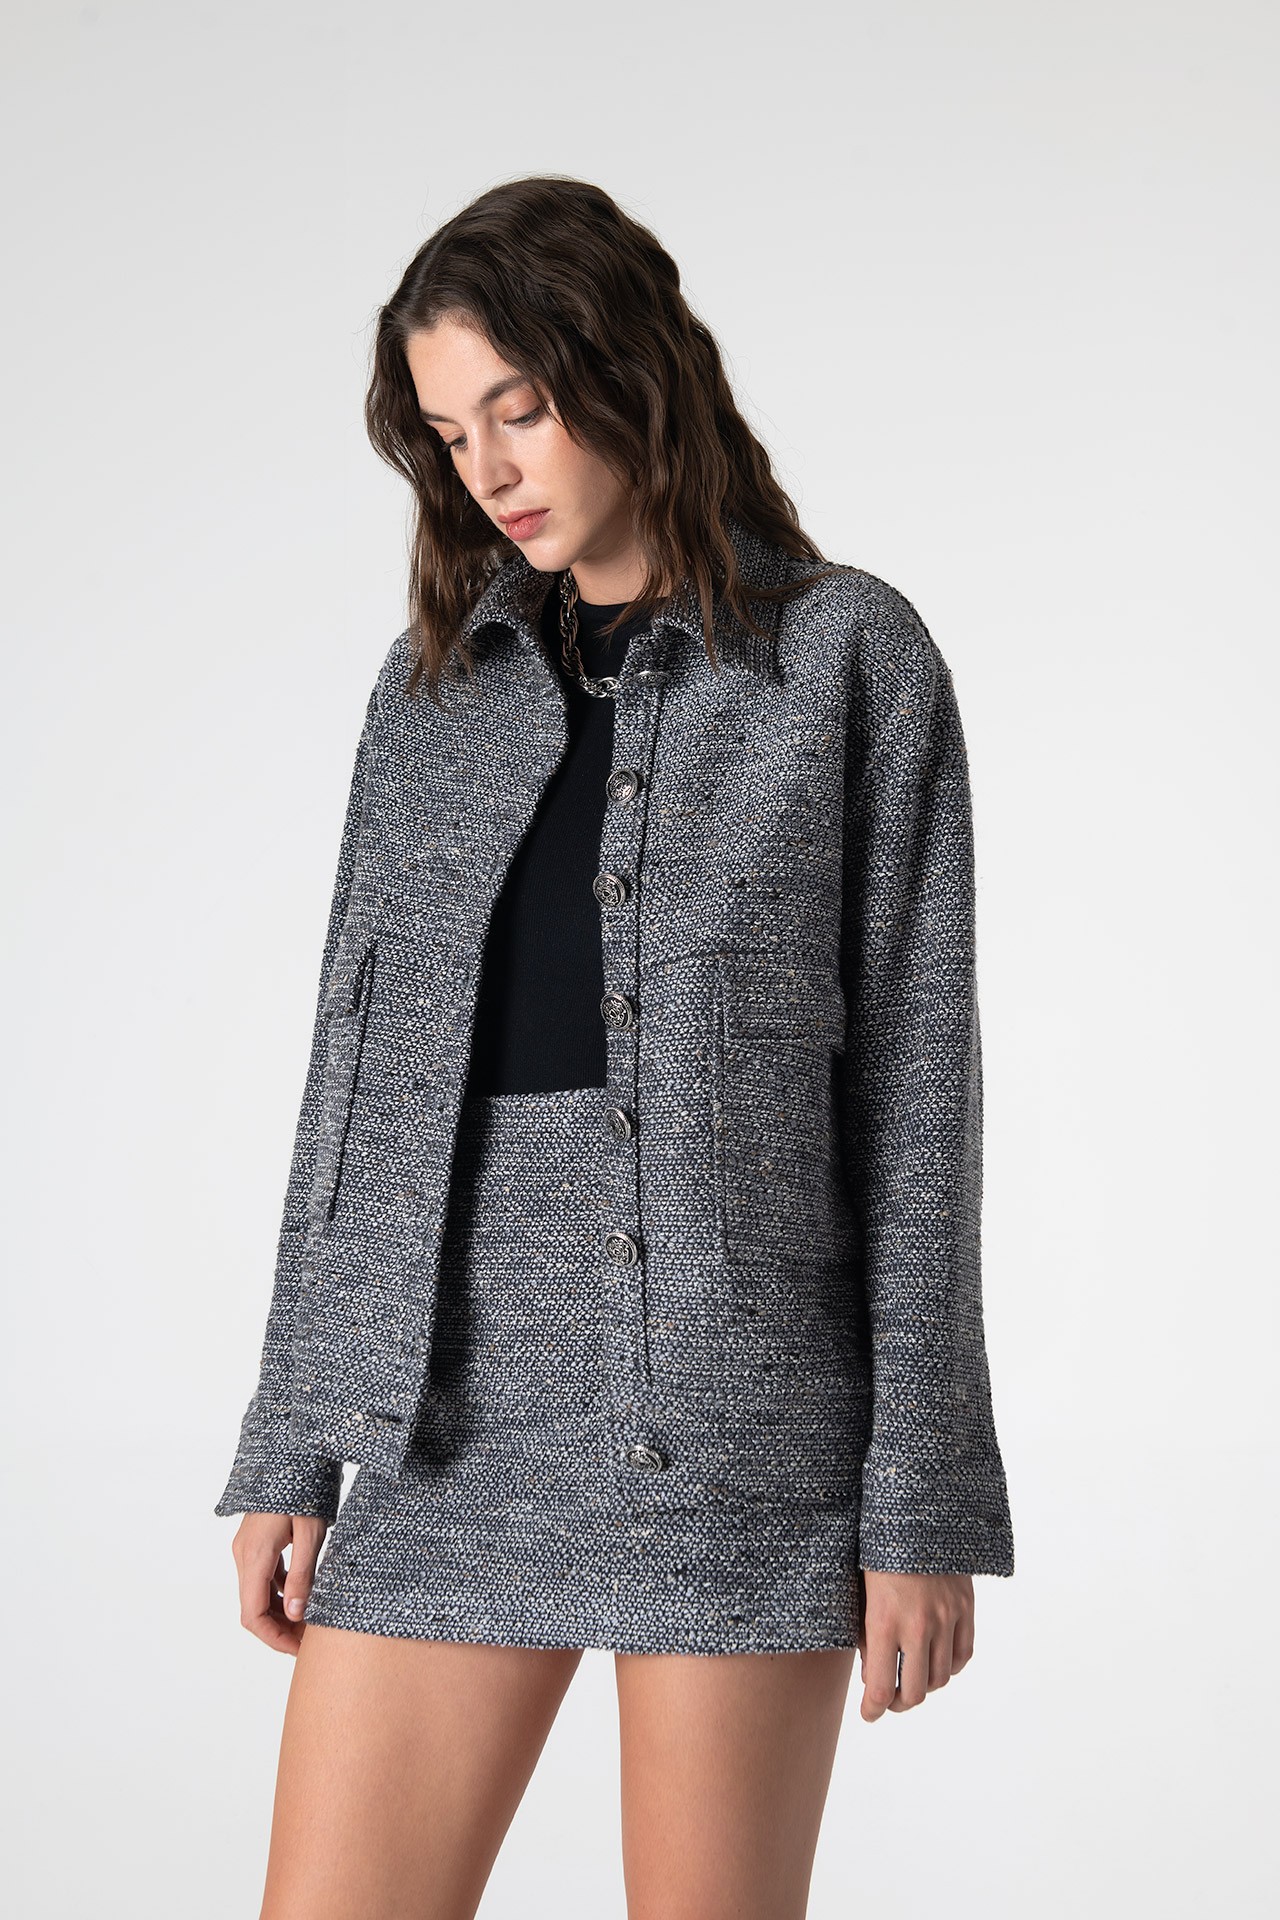 Carleen Textured Weaving Jacket - Anthracite Grey